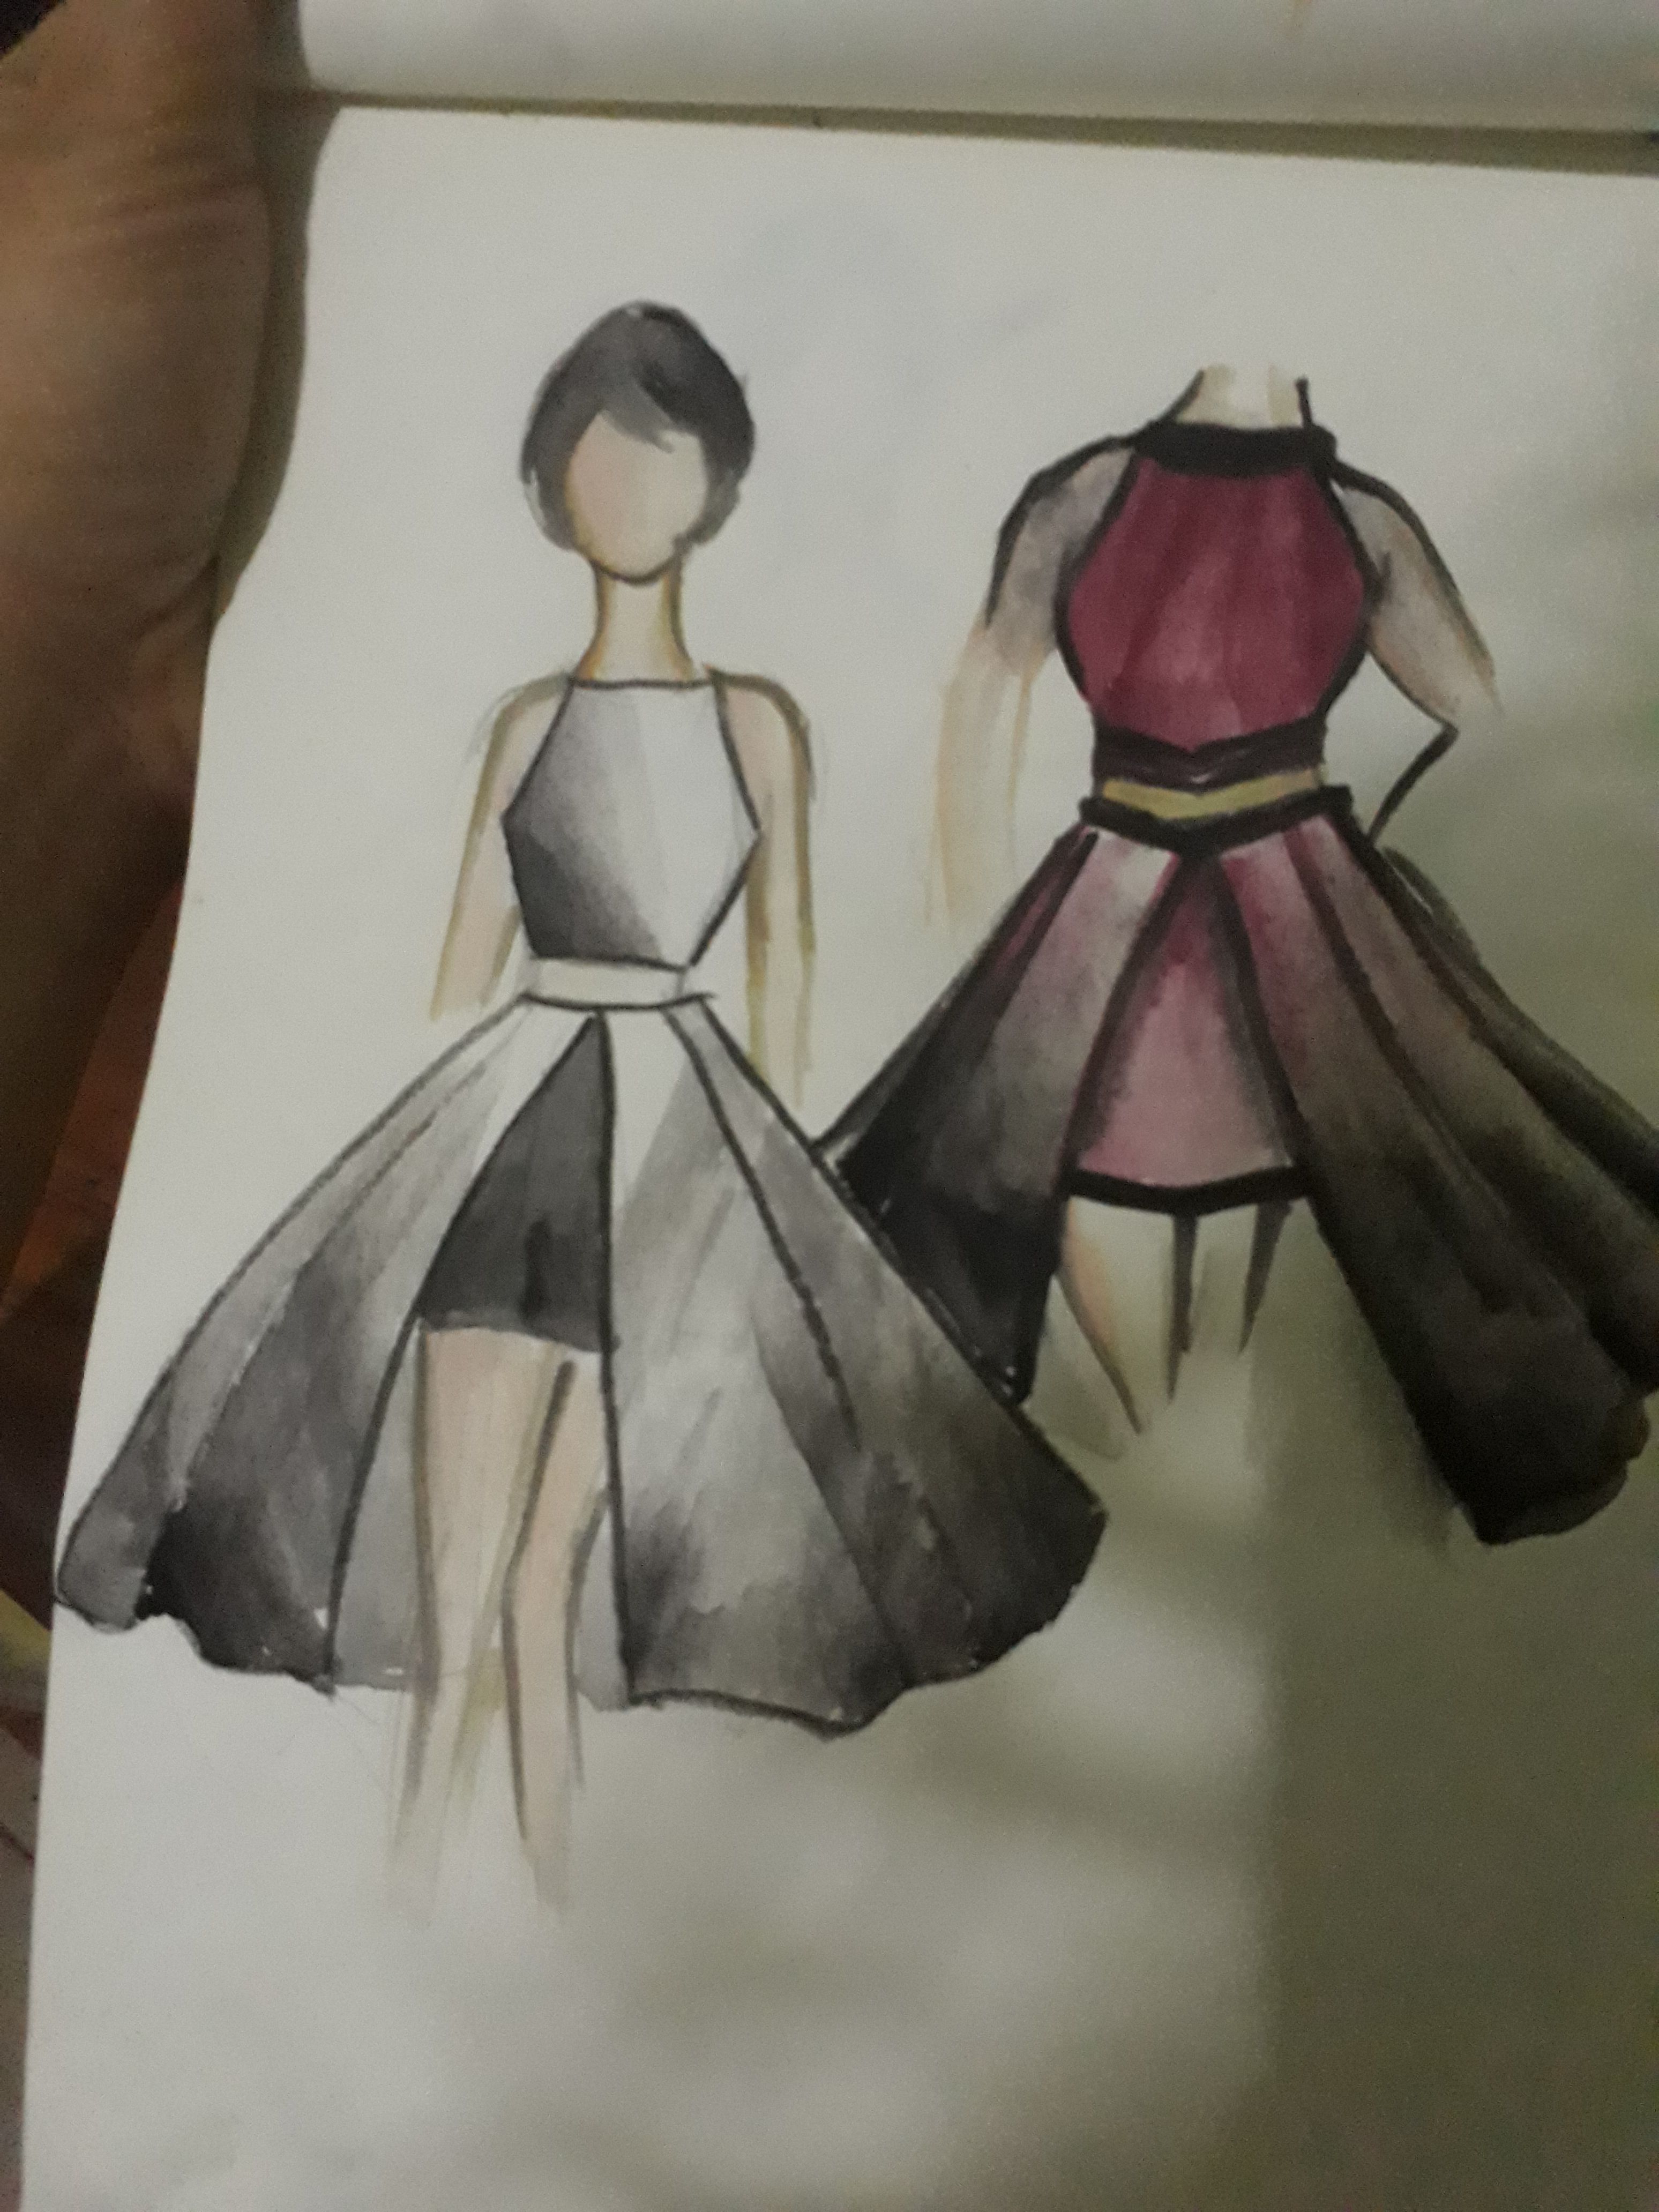 cute dress designs drawings